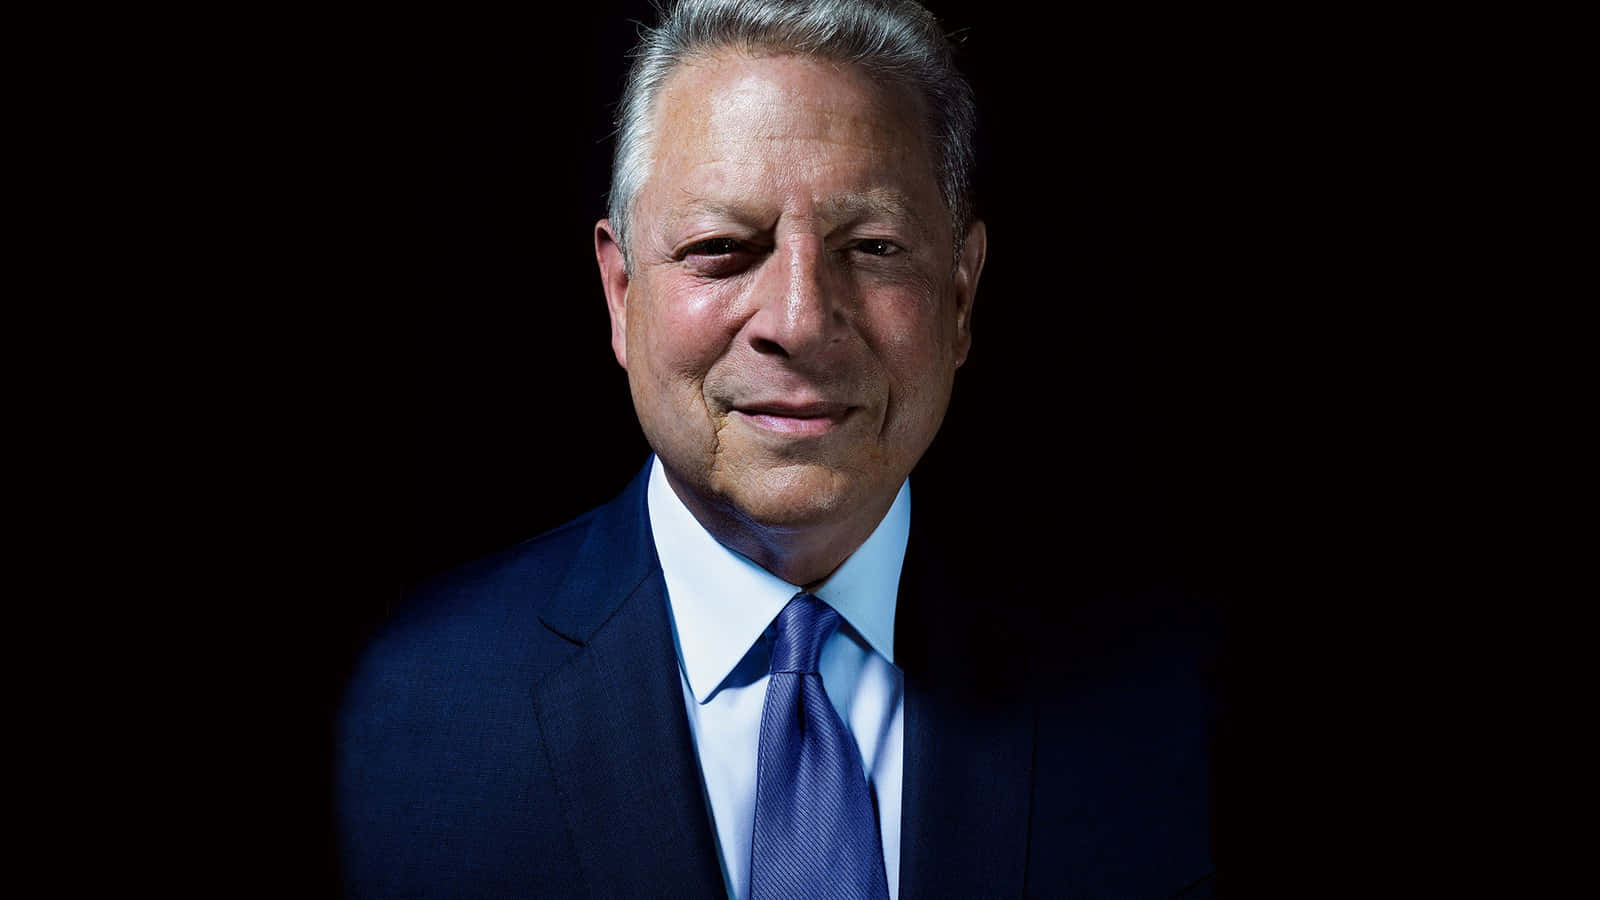 Al Gore Smiling At The Camera Wallpaper